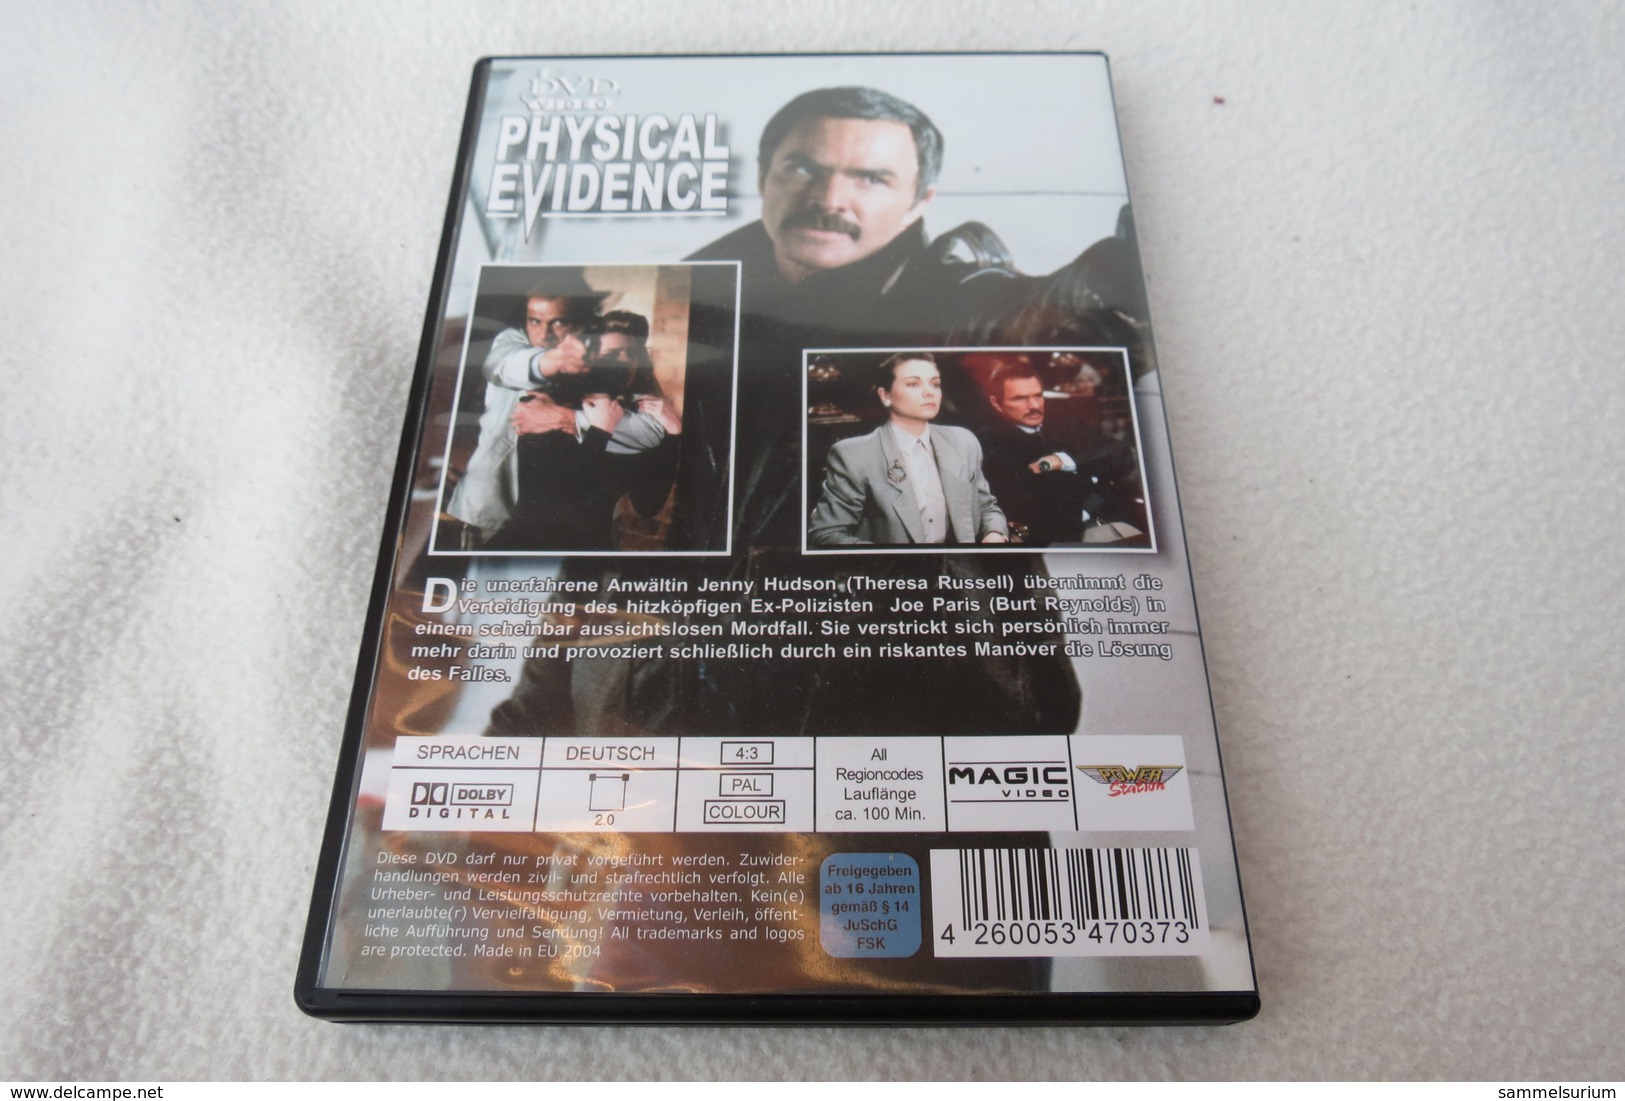 DVD "Physical Evidence" - DVD Musicali